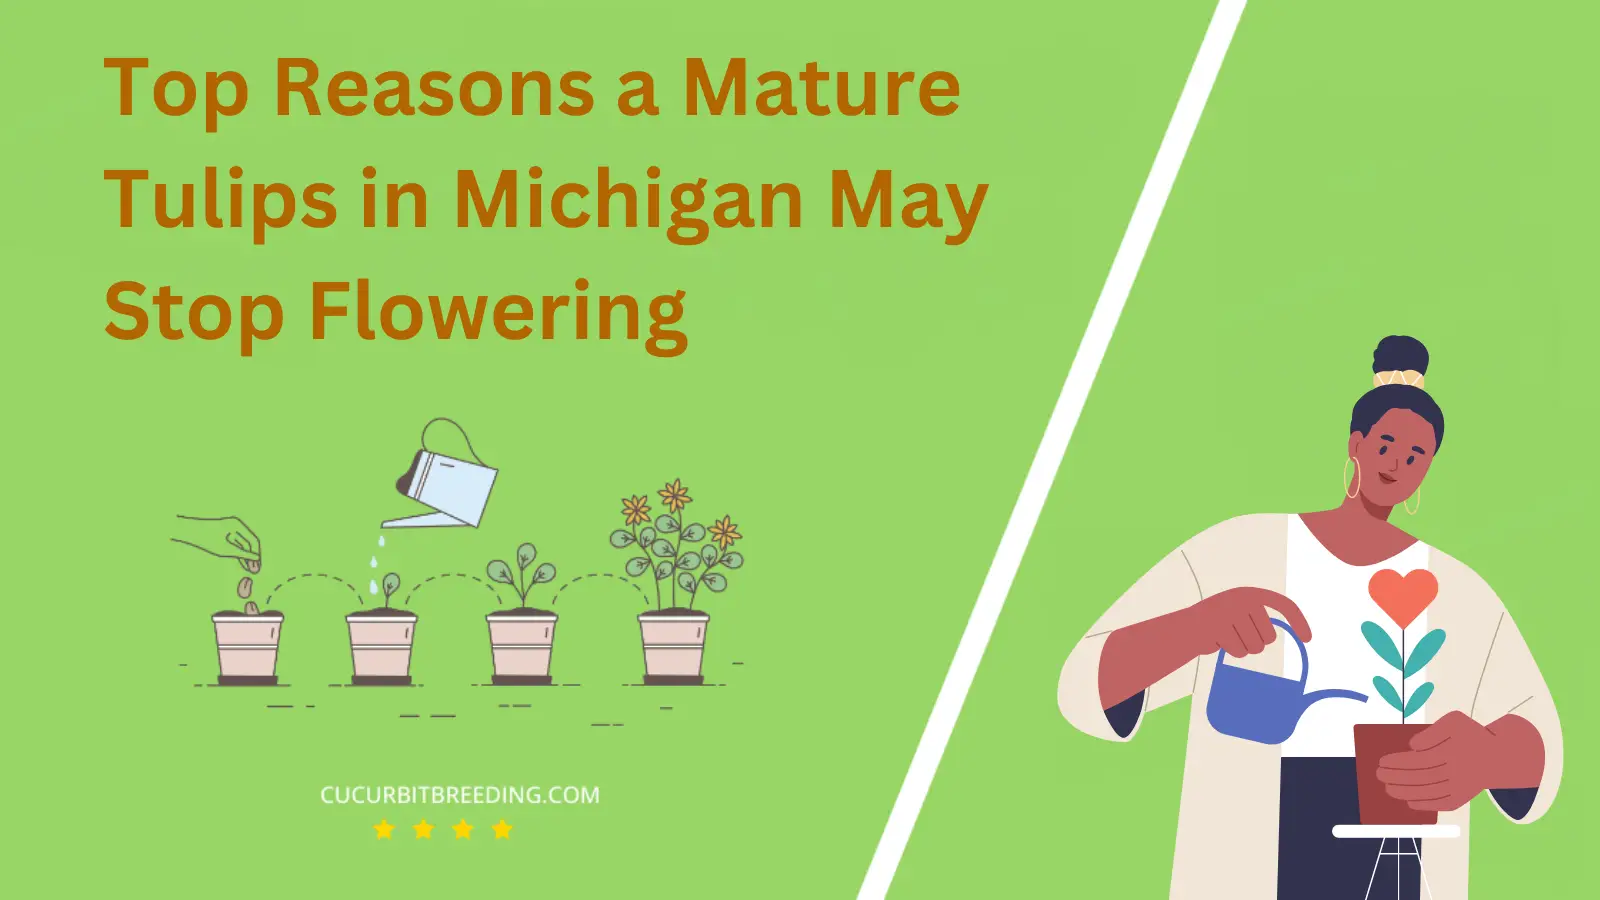 Top Reasons a Mature Tulips in Michigan May Stop Flowering